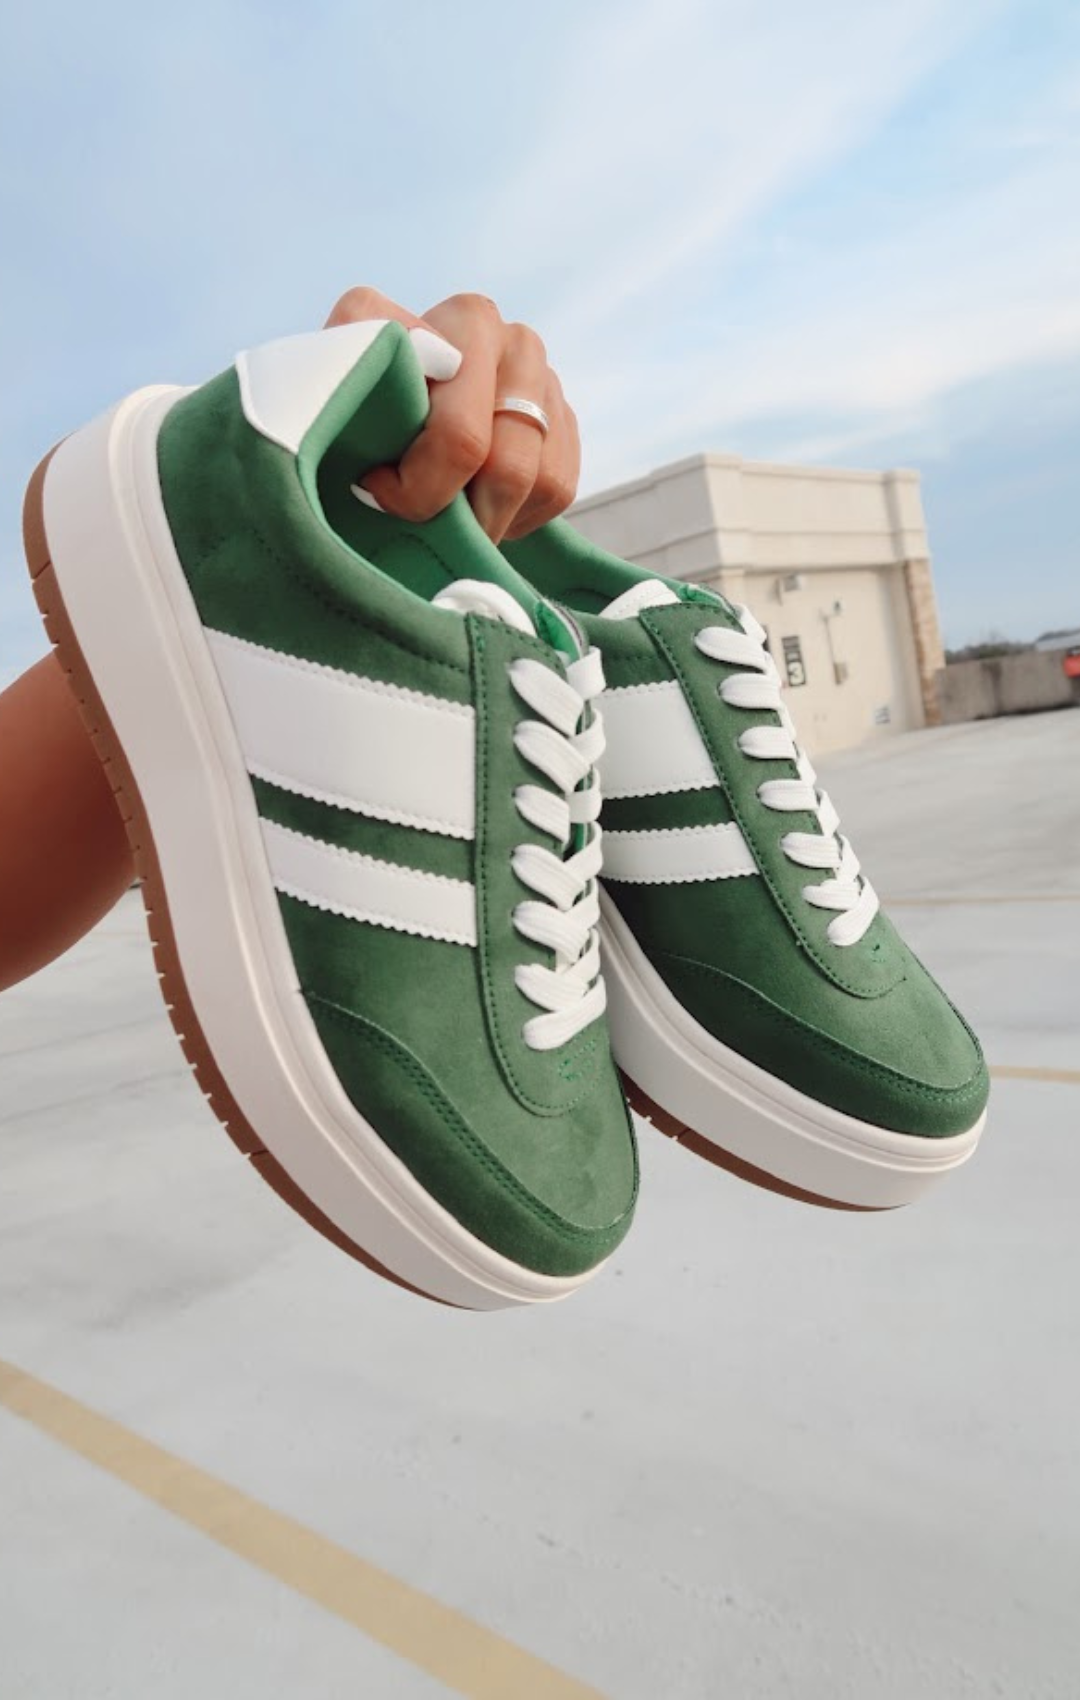 Navida Green Sneakers by Madden Girl